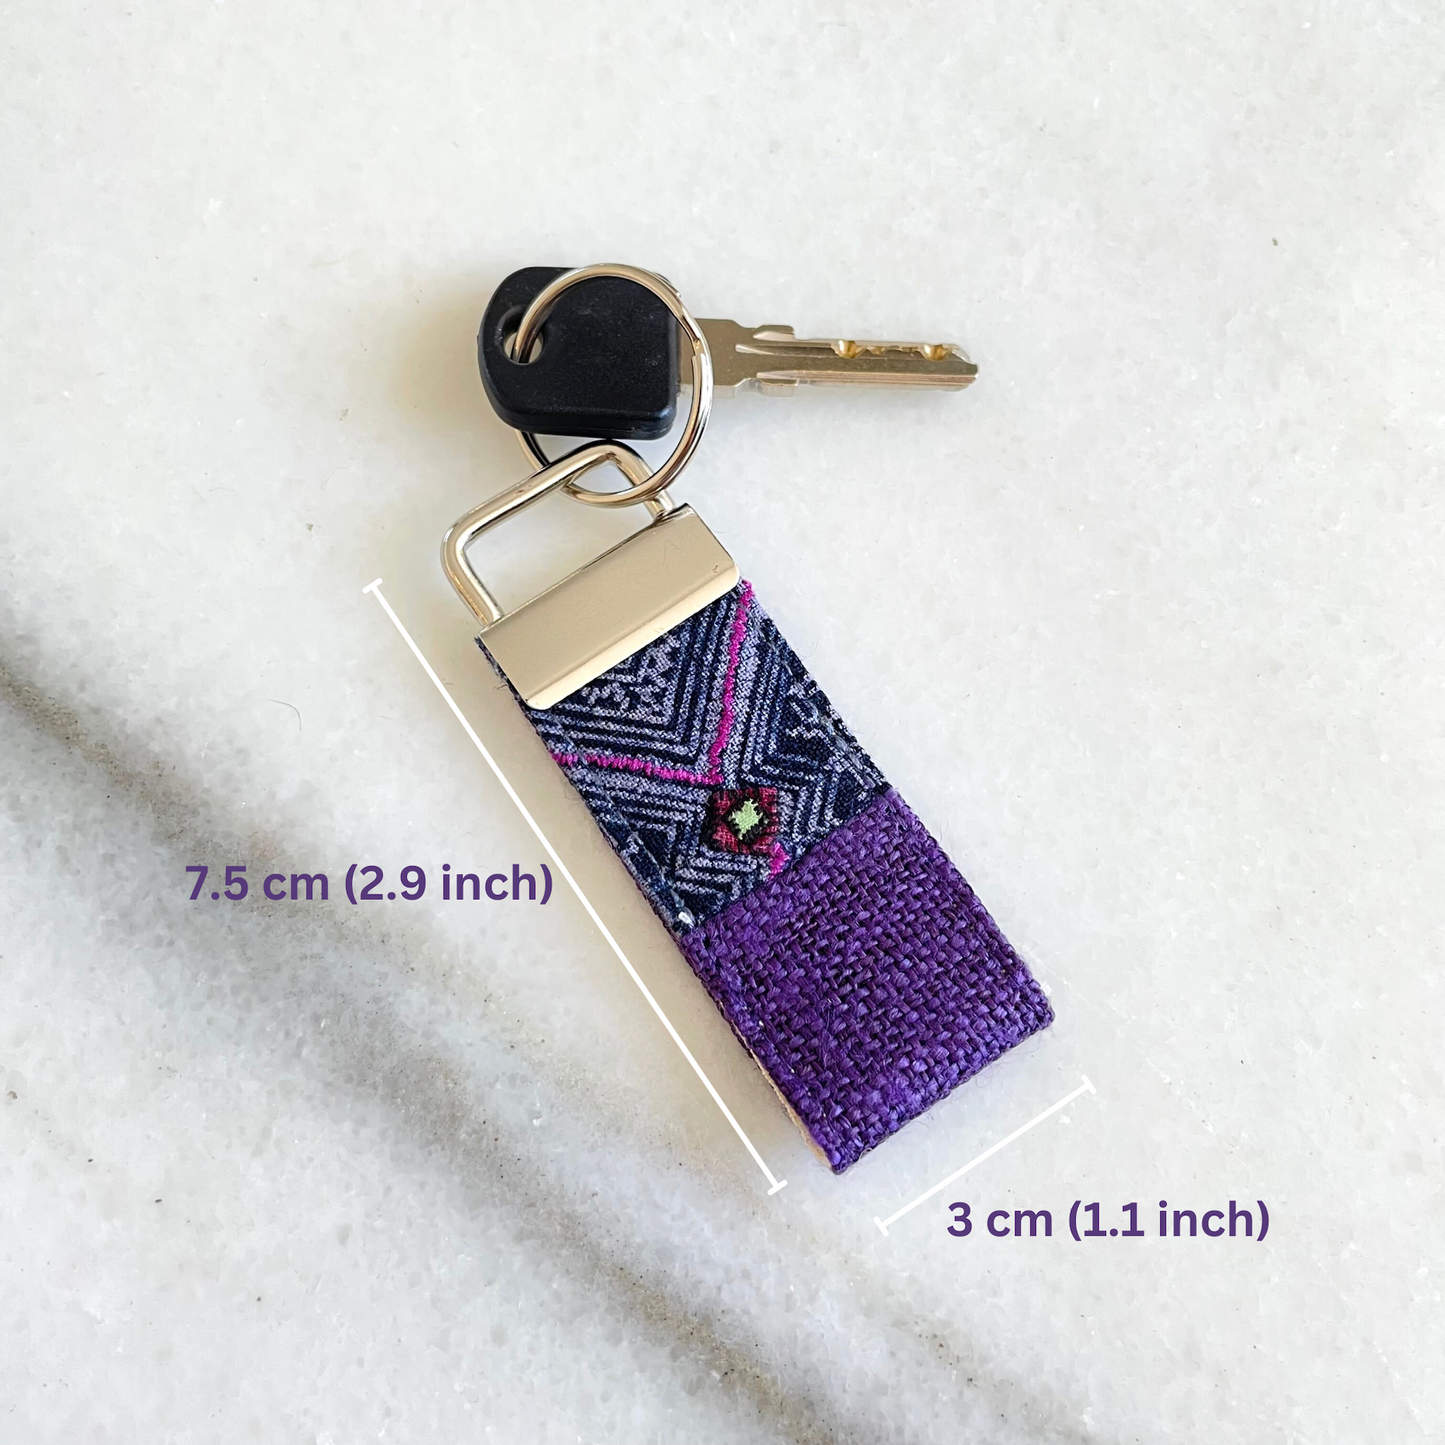 White hemp fabric keychain with vintage batik patch, stainless metal key fob